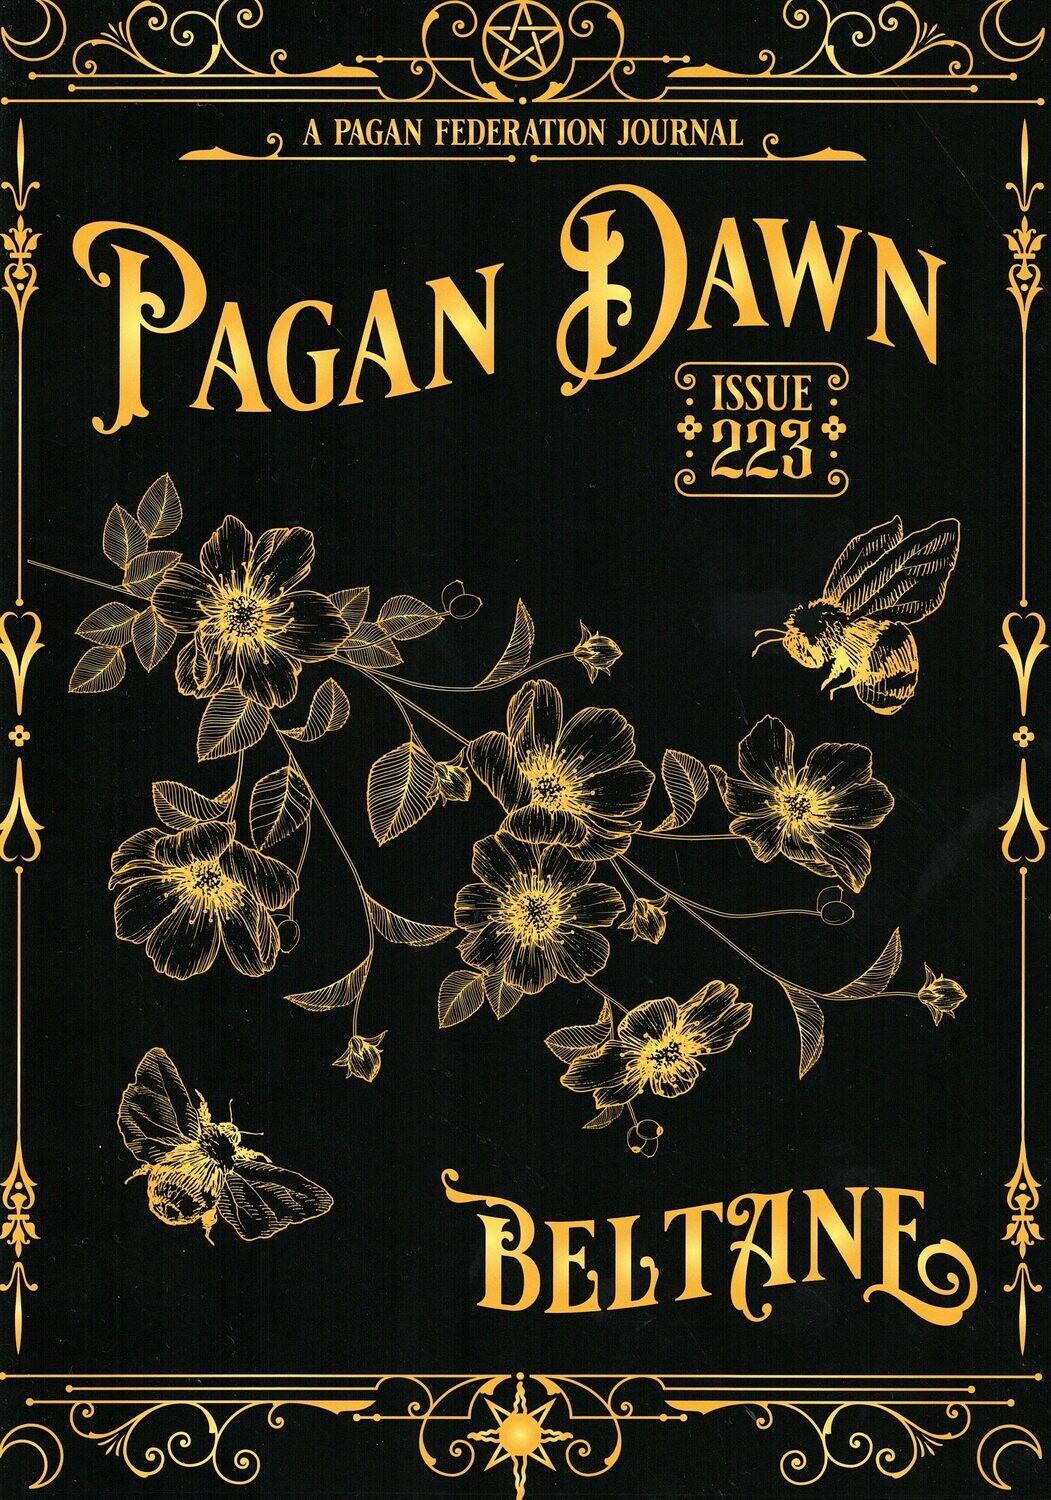 Pagan Dawn #223 Beltane 2022